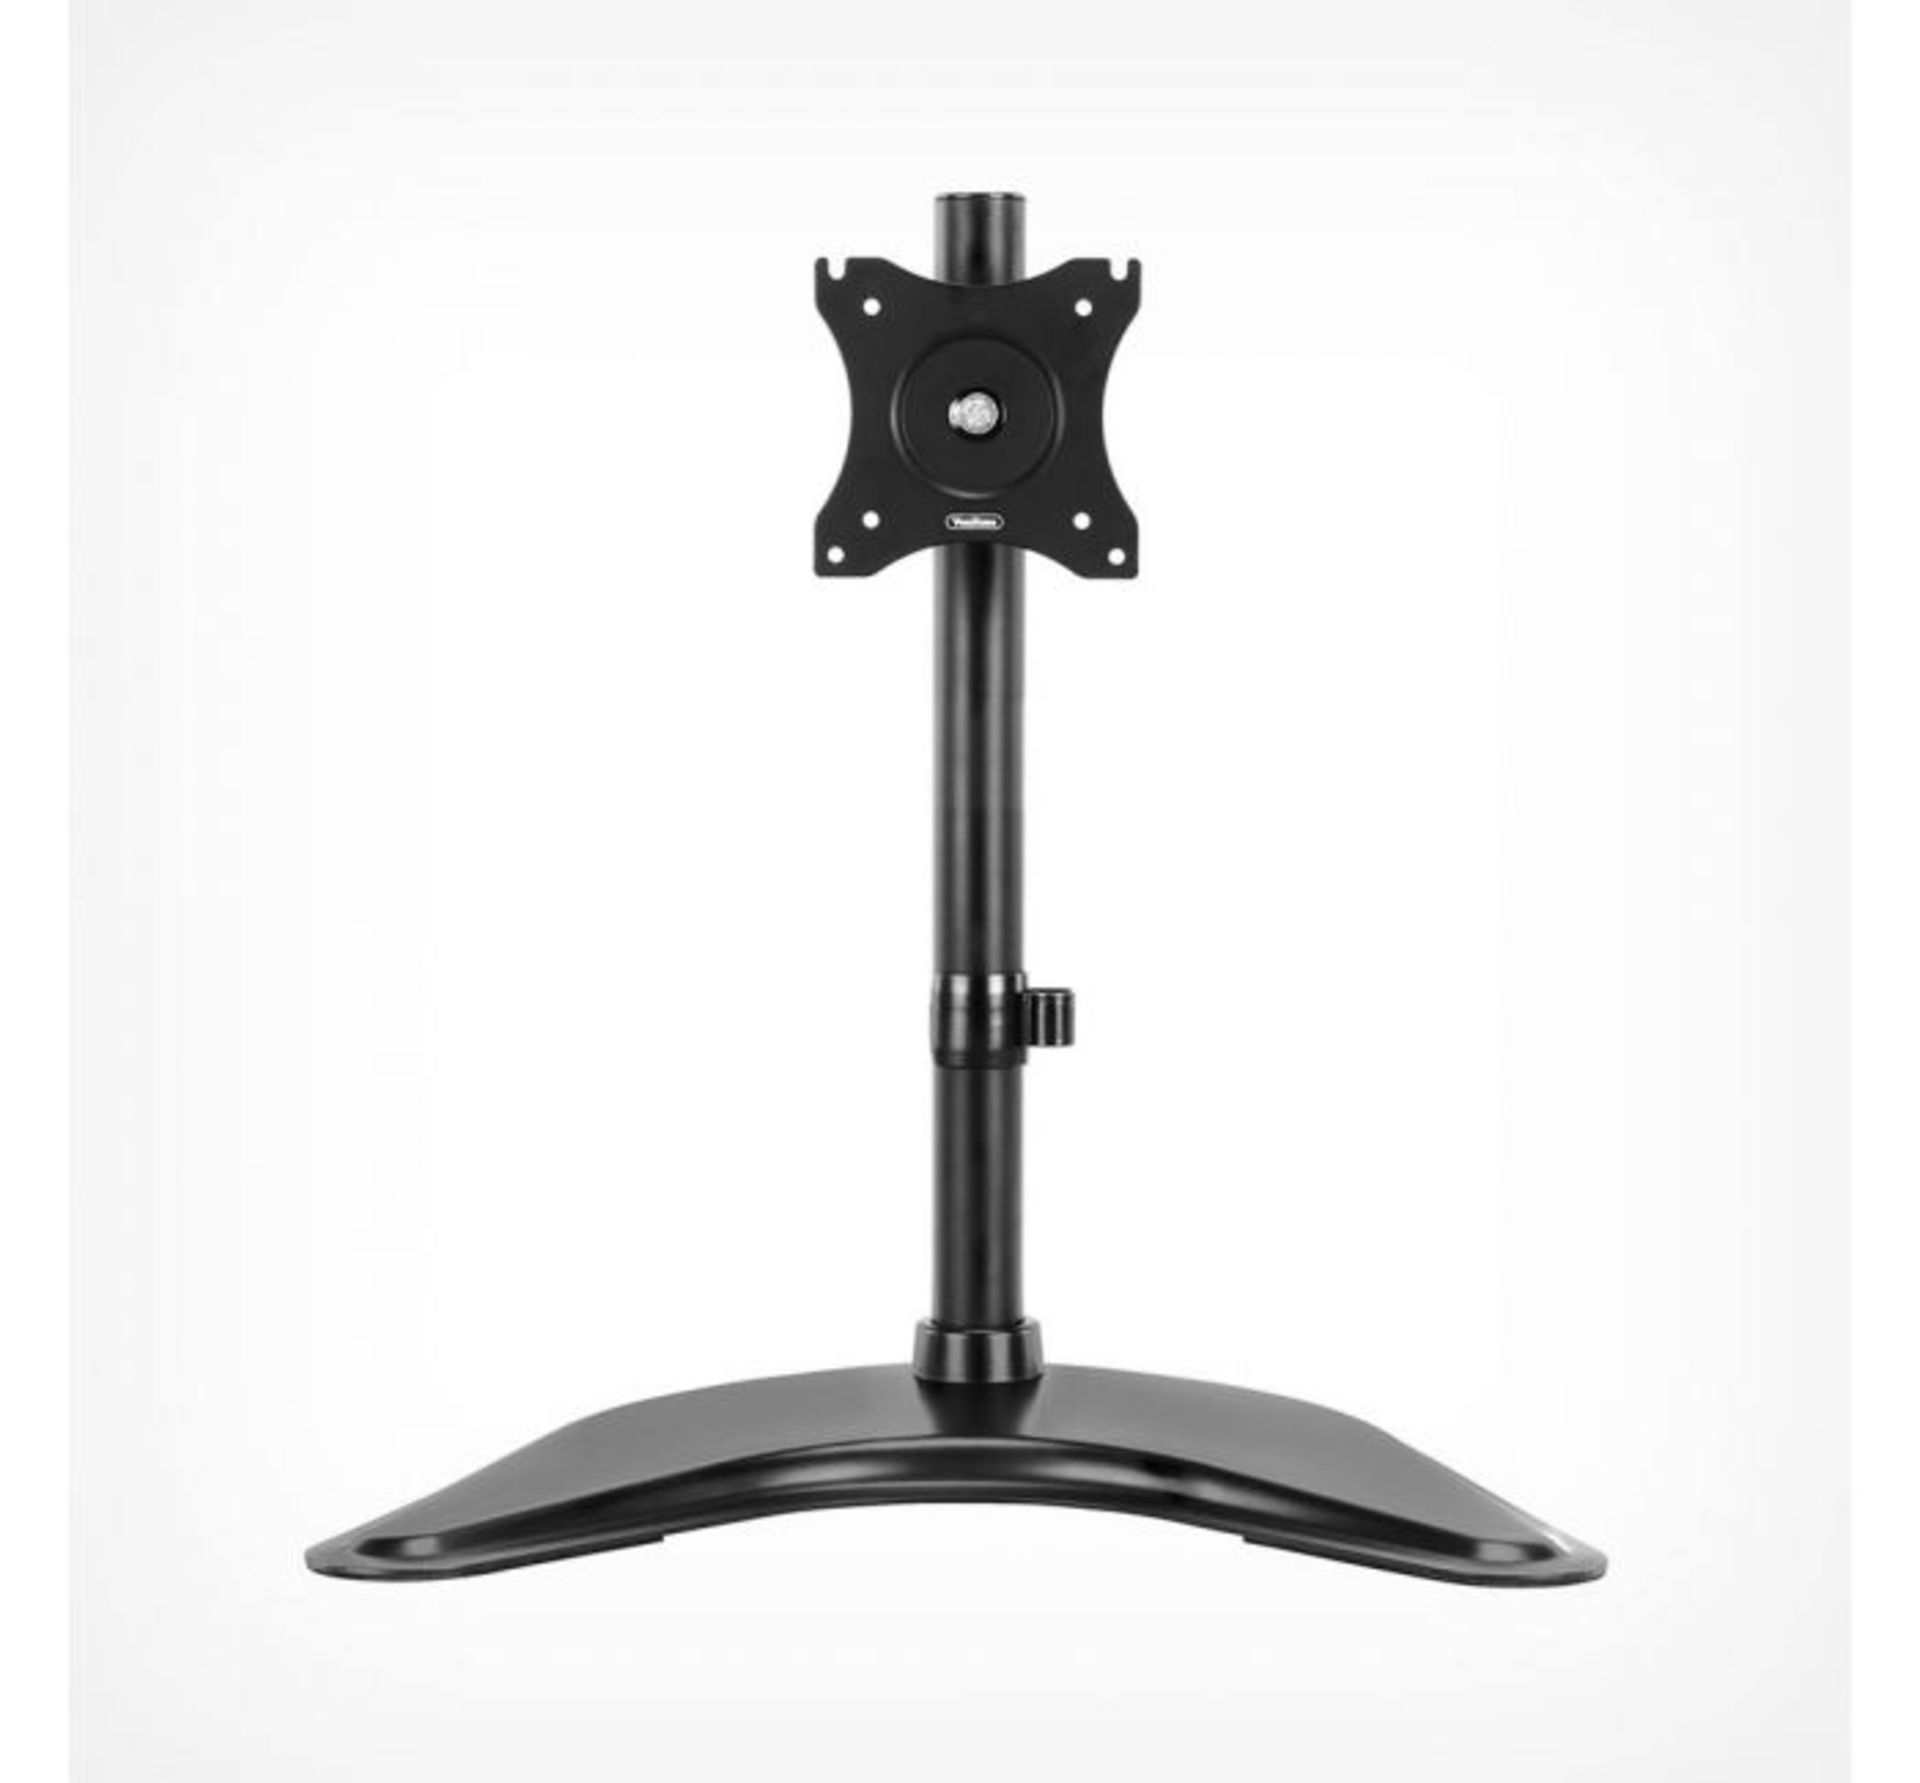 (X42) Single Monitor Desk Mount. Heavy duty single monitor mount - maximum weight capacity 10kg...